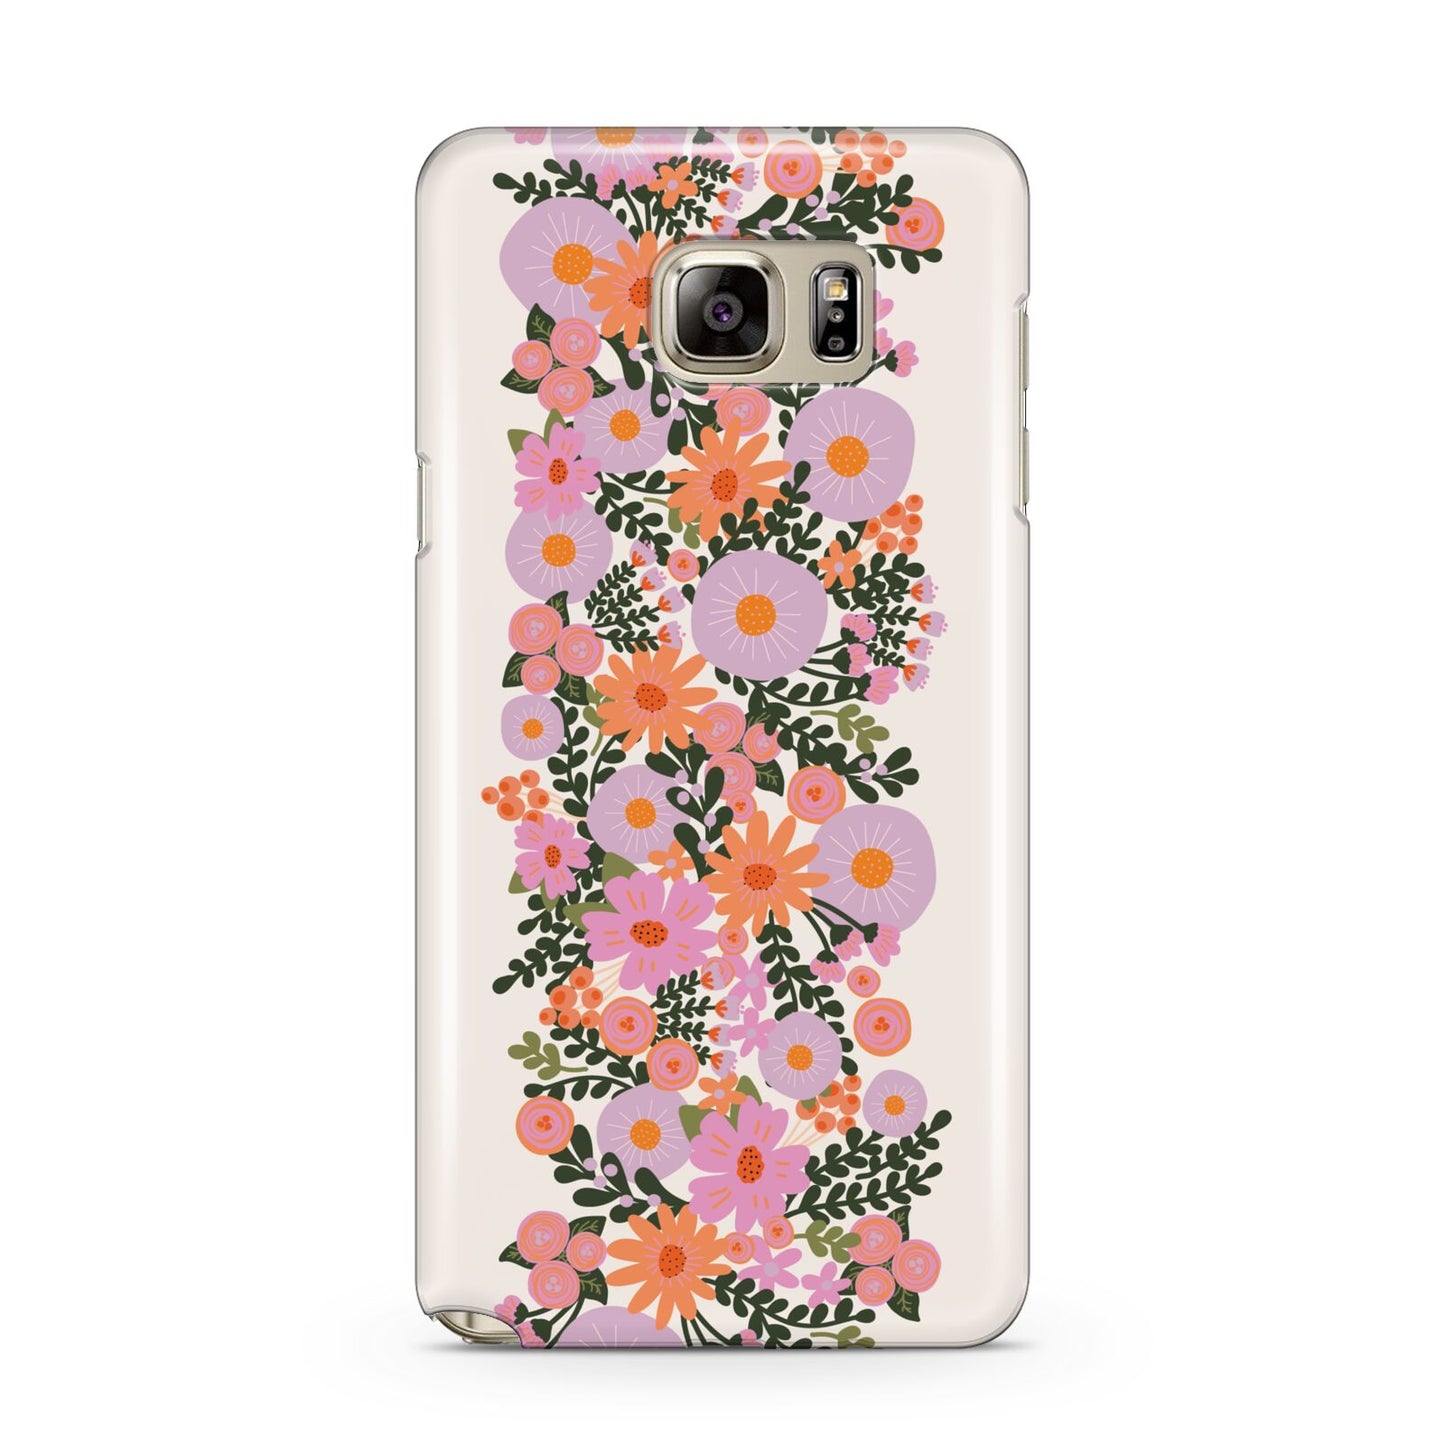 Floral Banner Pattern Samsung Galaxy Note 5 Case